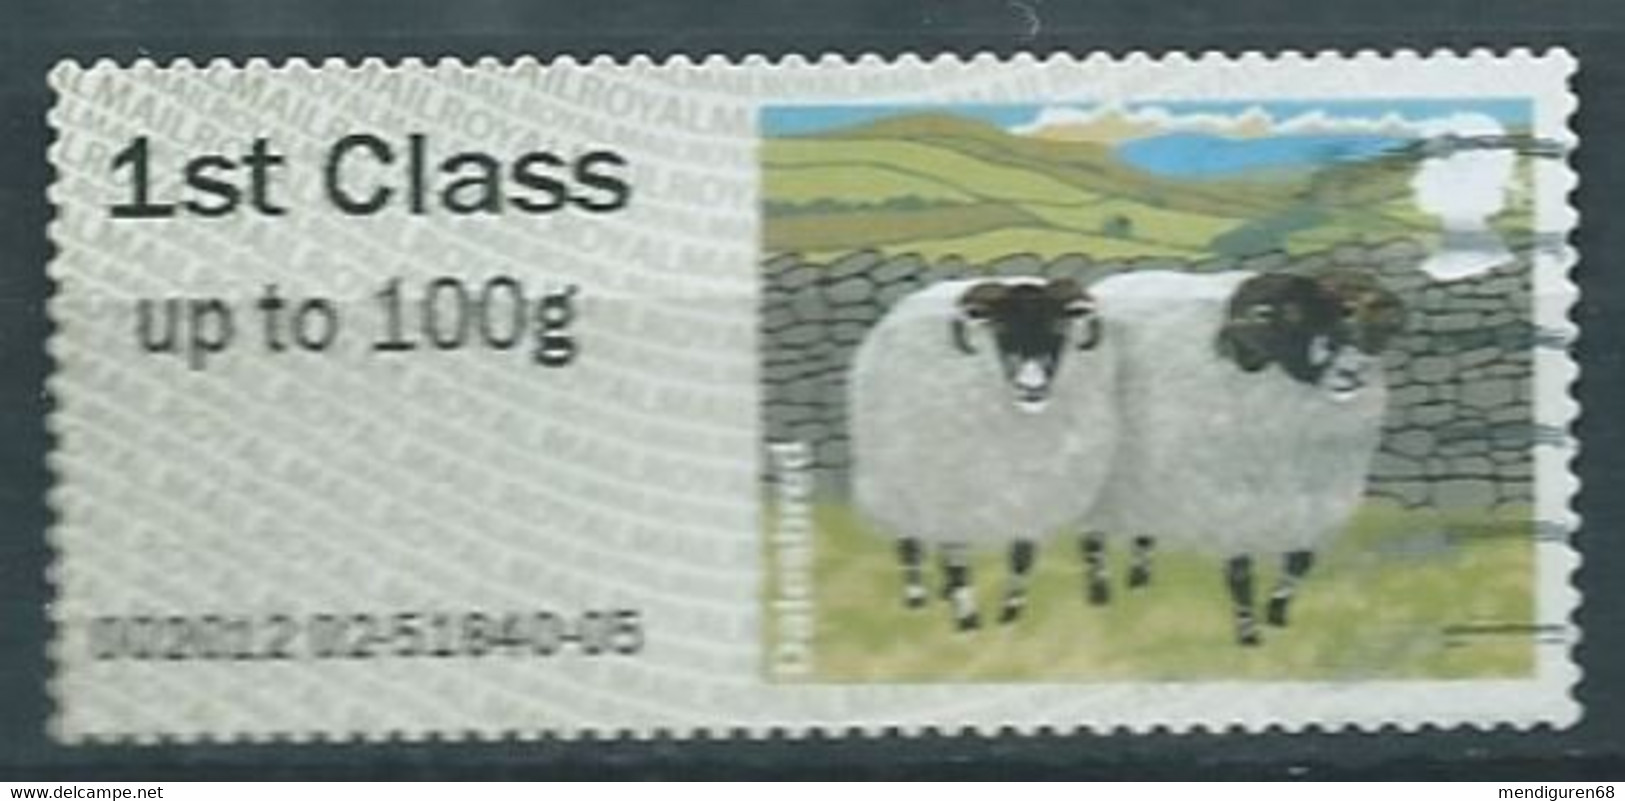 GROSBRITANNIEN GRANDE BRETAGNE GB 2012 POST&GO SHEEP:DALESBRED 1ST CLASS Up To 10g USED PAPER SG TD 30 MI ATM 2 YT TD28 - Post & Go Stamps